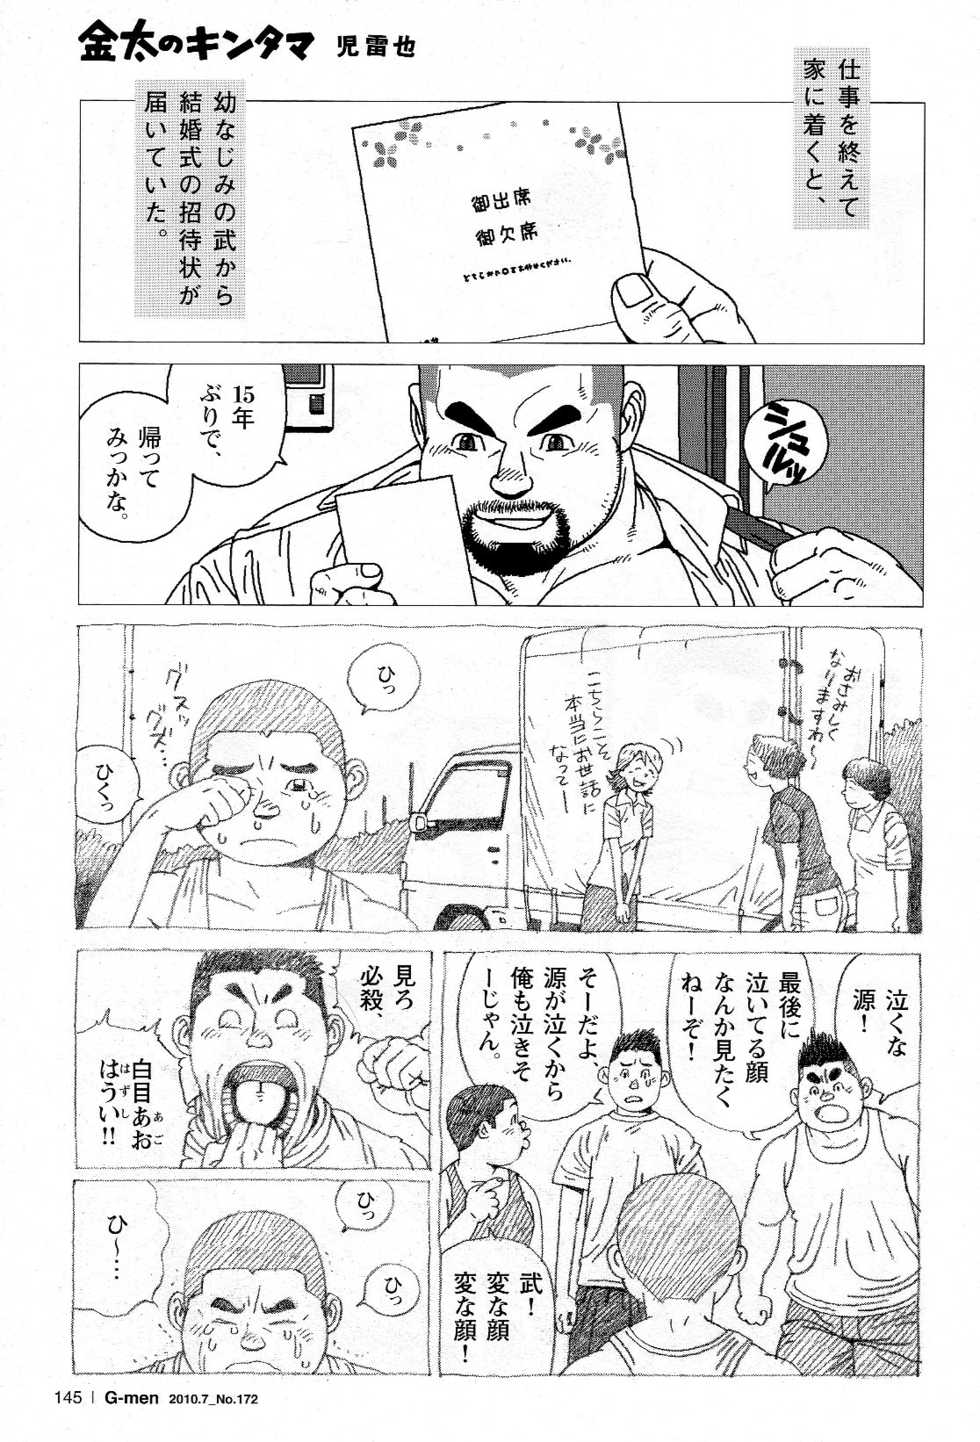 [Jiraiya] Kinta no Kintama (G-men No.172 2010-07) - Page 1